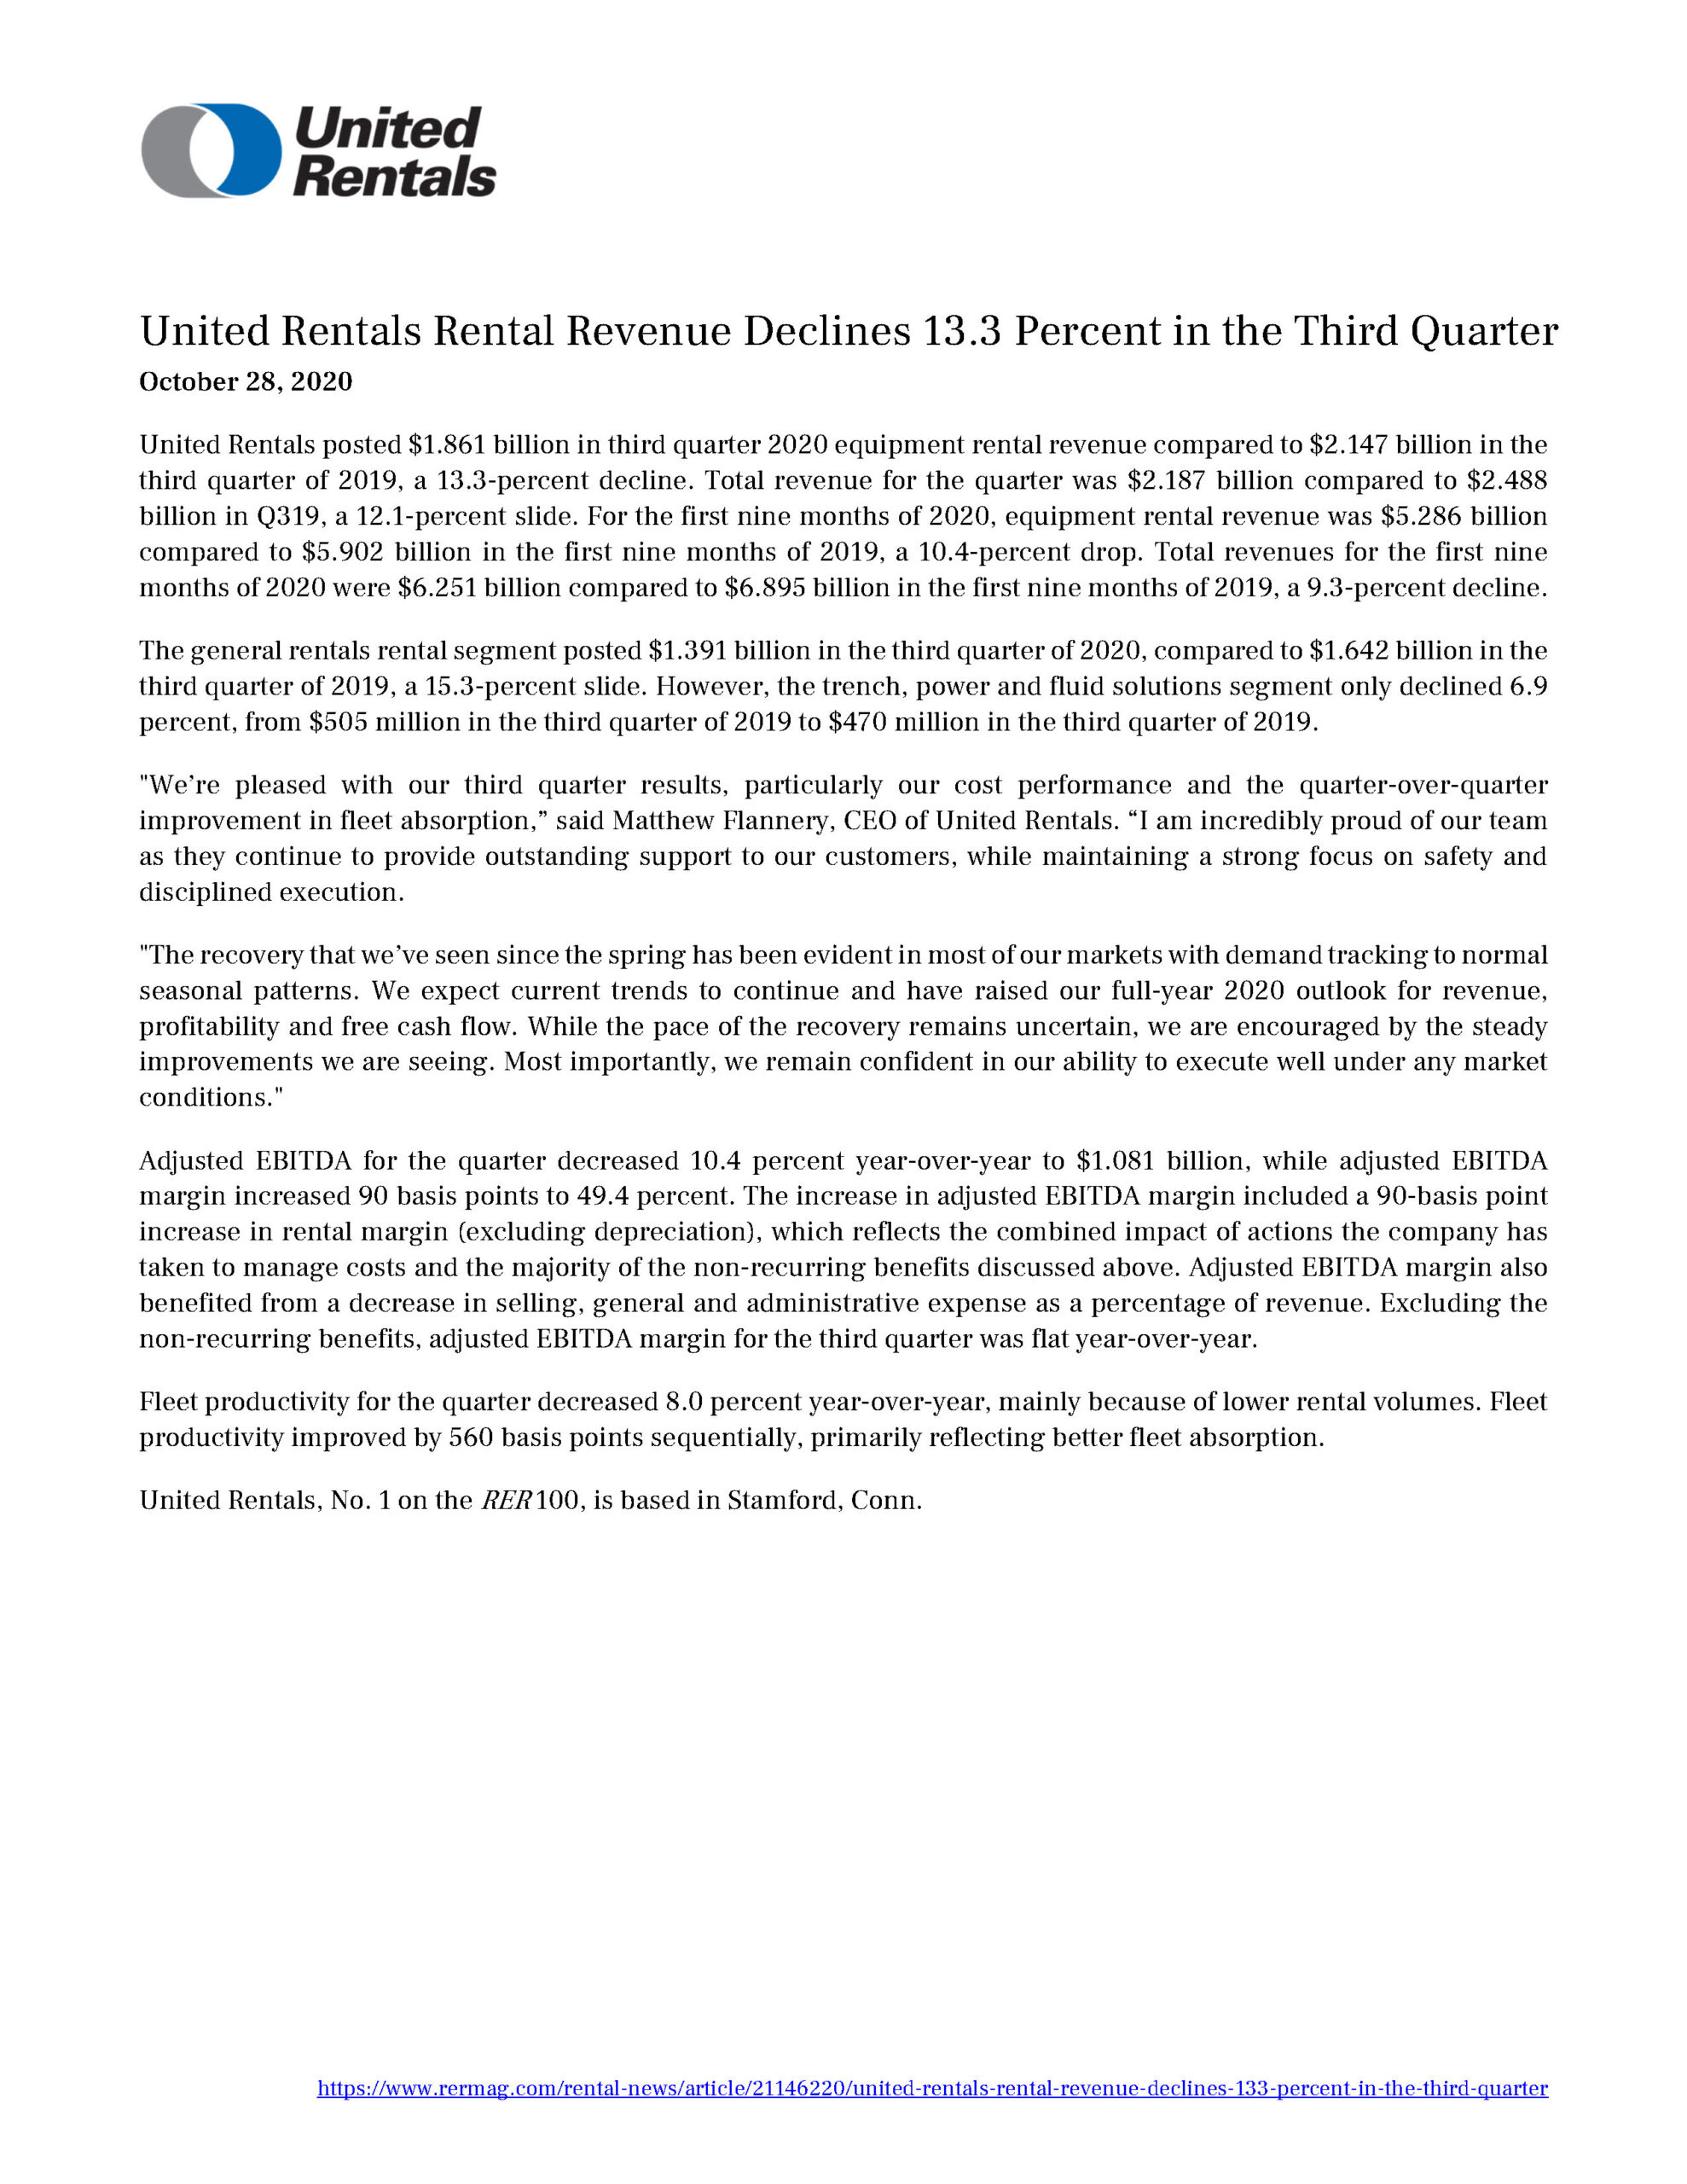 United Rentals Rental Revenue Declines 13.3 Percent in the Third Quarter 10.28.2020